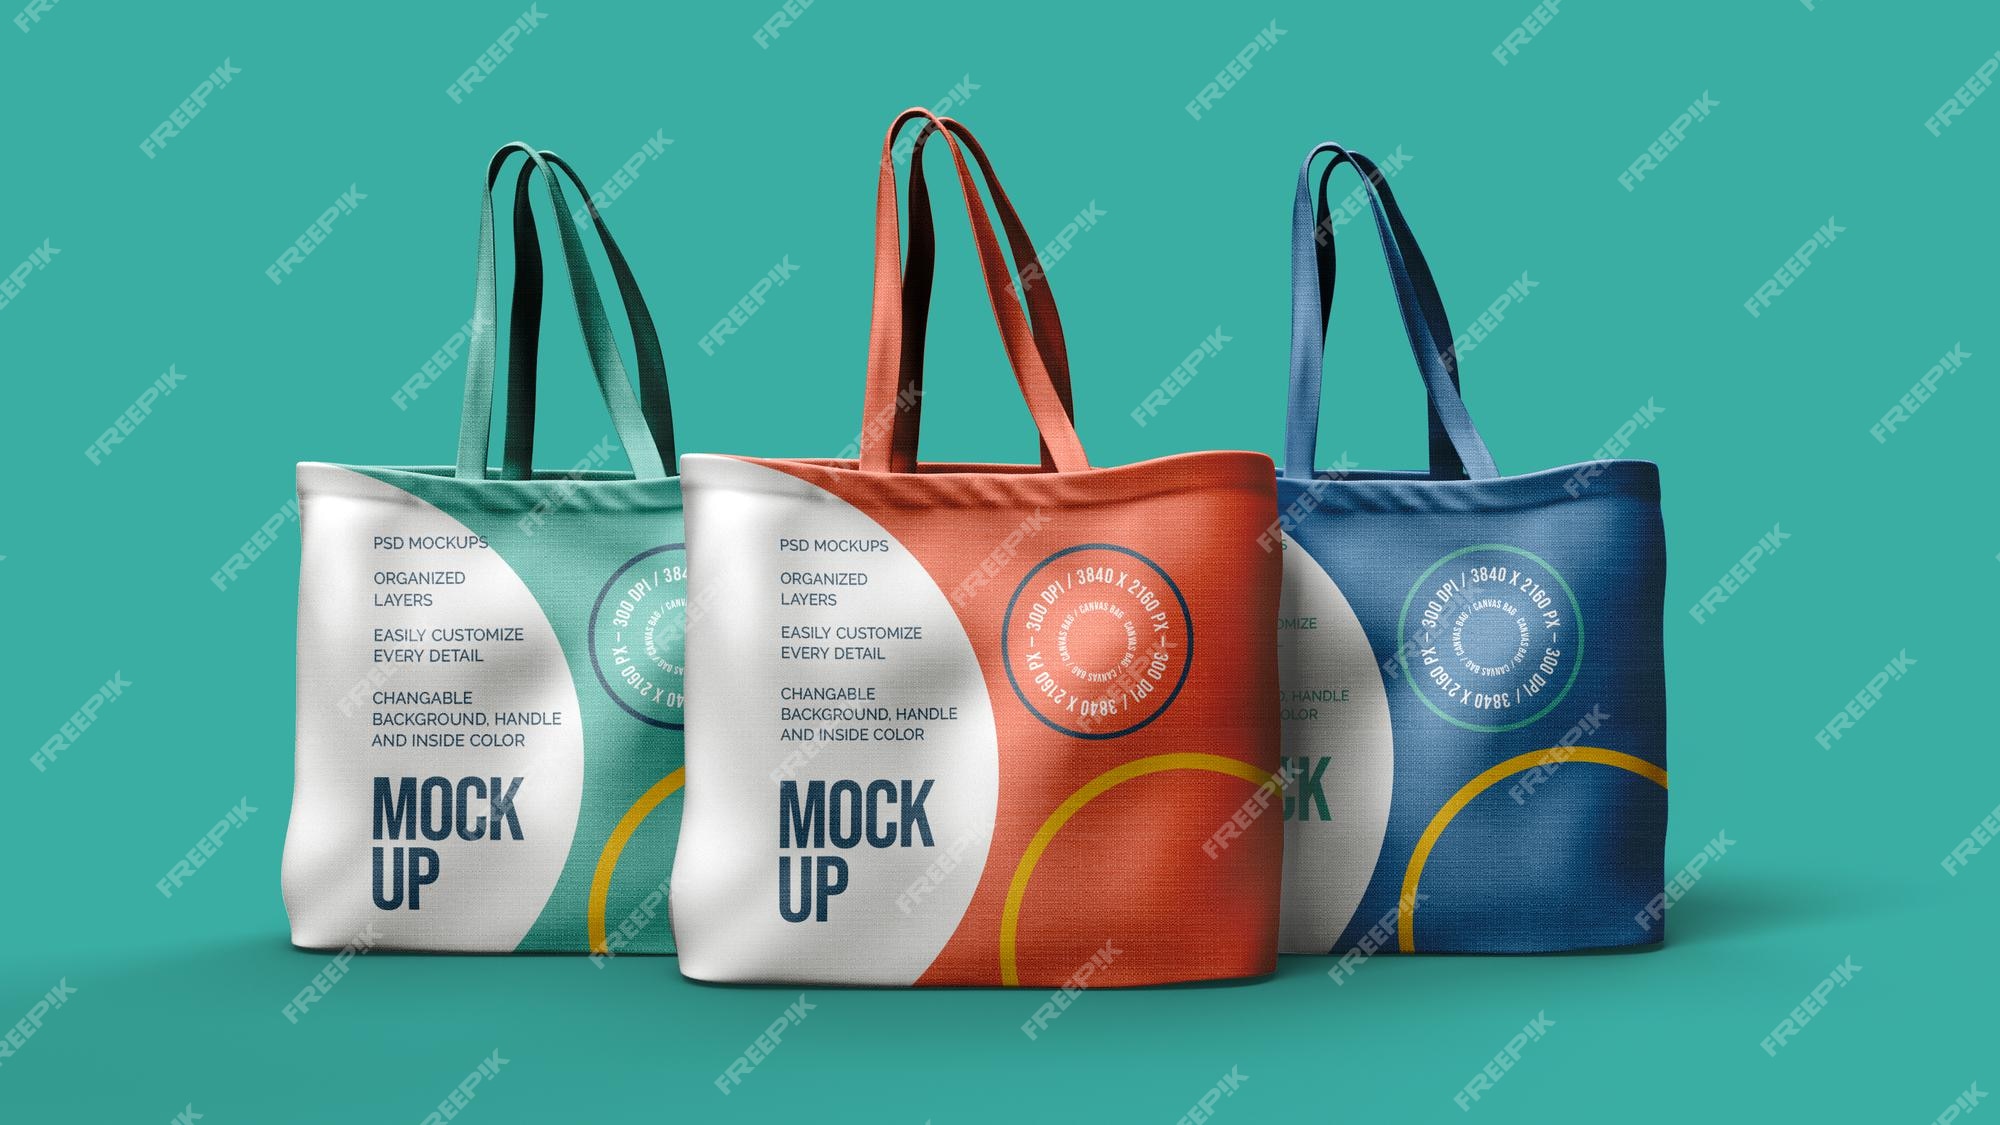 Premium PSD | Canvas bags mockup design isolated